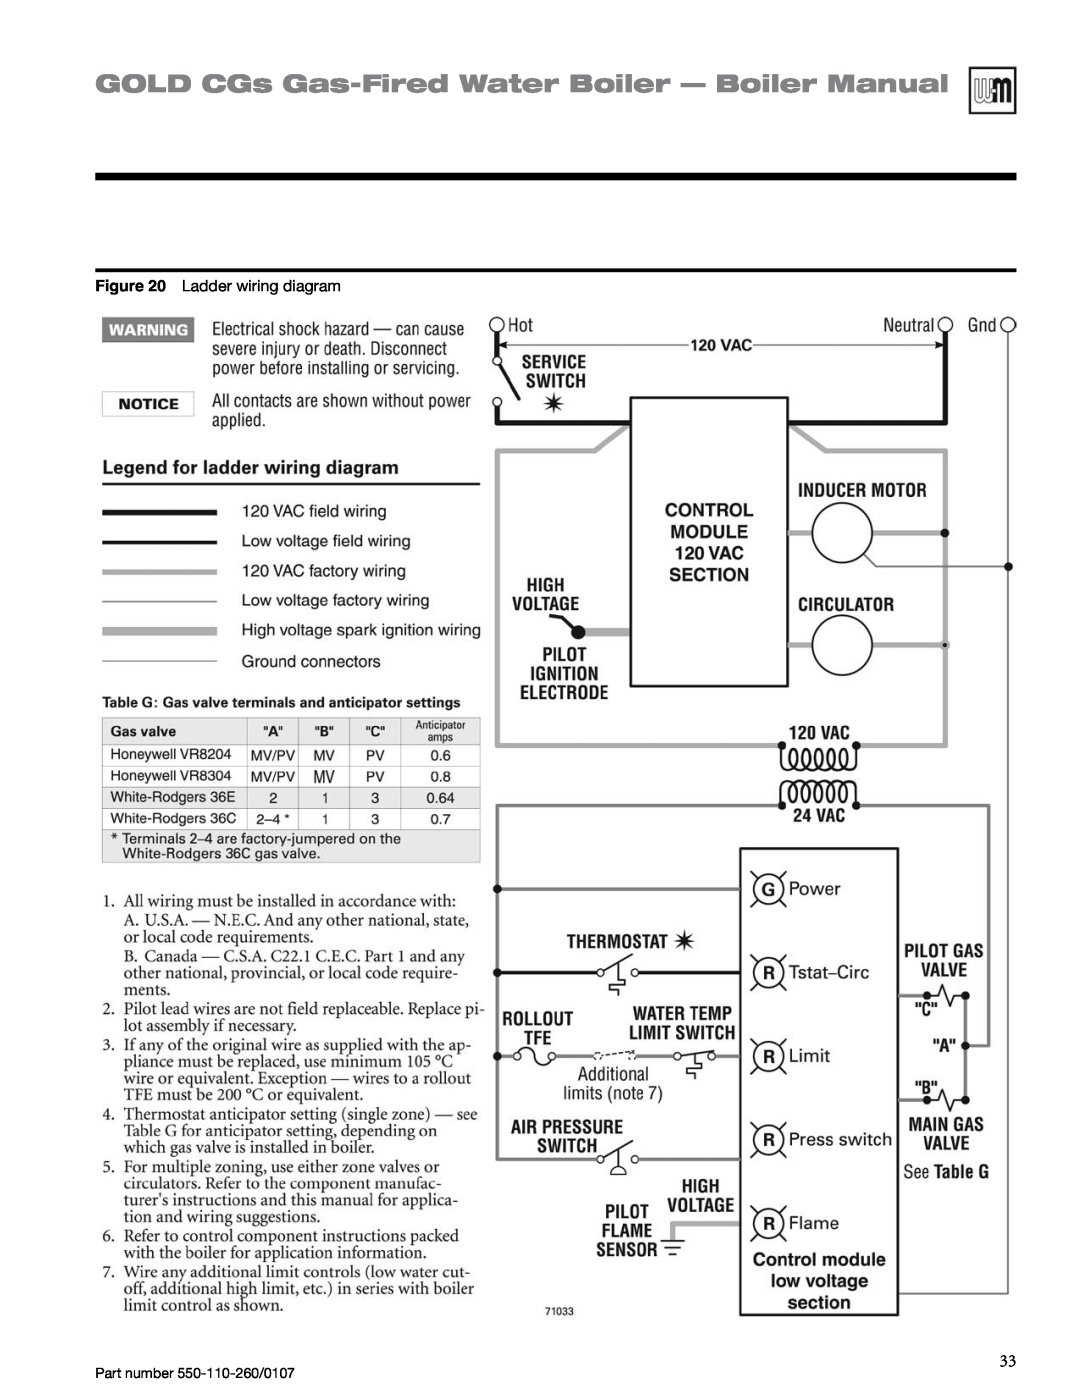 Weil-McLain 550-110-260/0107 manual GOLD CGs Gas-FiredWater Boiler - Boiler Manual, Ladder wiring diagram 